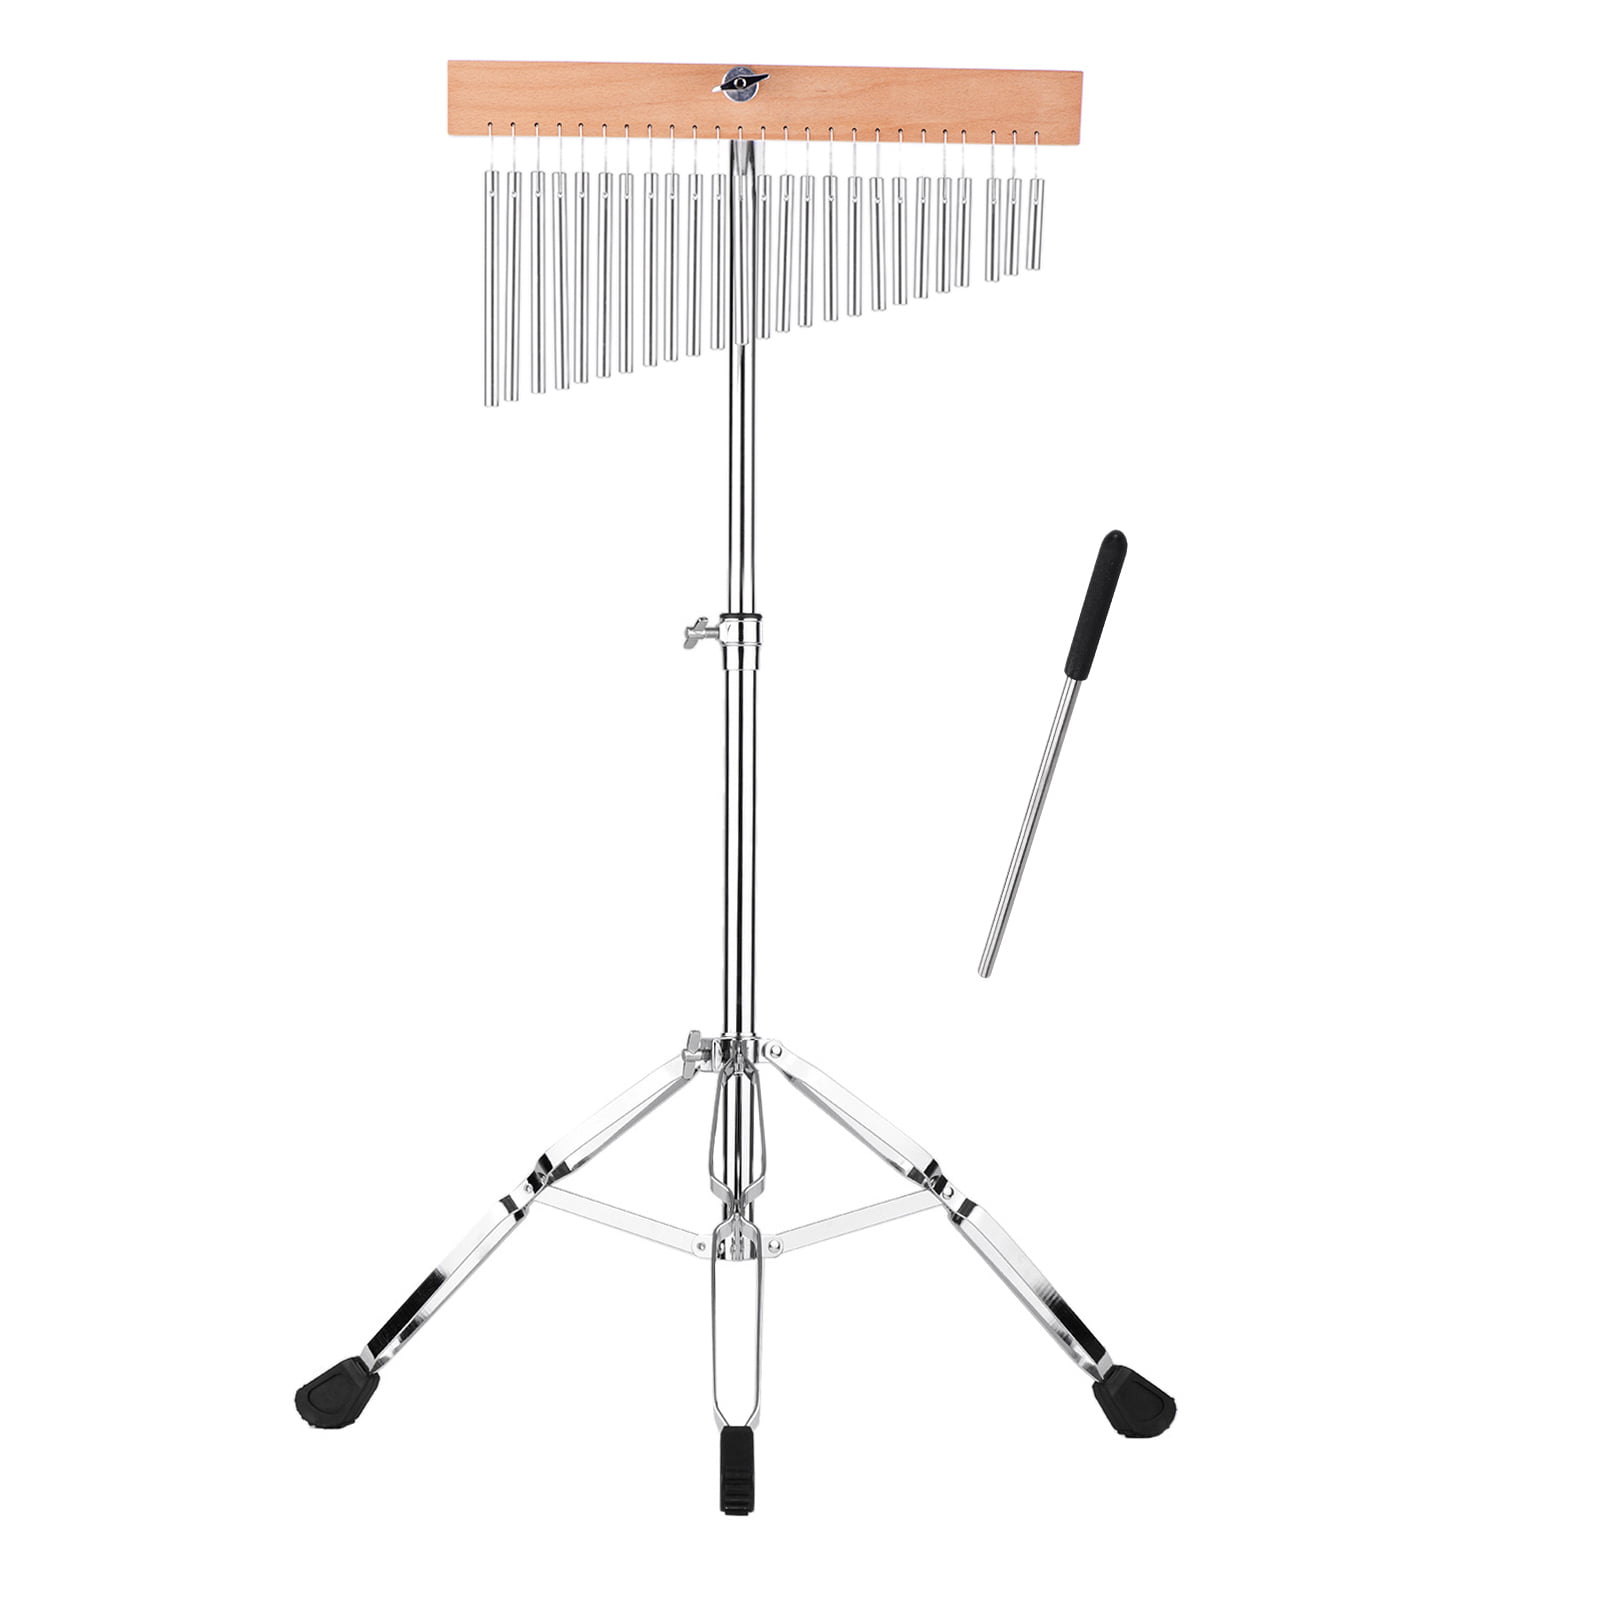 LoveinDIY 25-Tone Aluminum Bar Chimes Single-row Wind Bell Musical Percussion